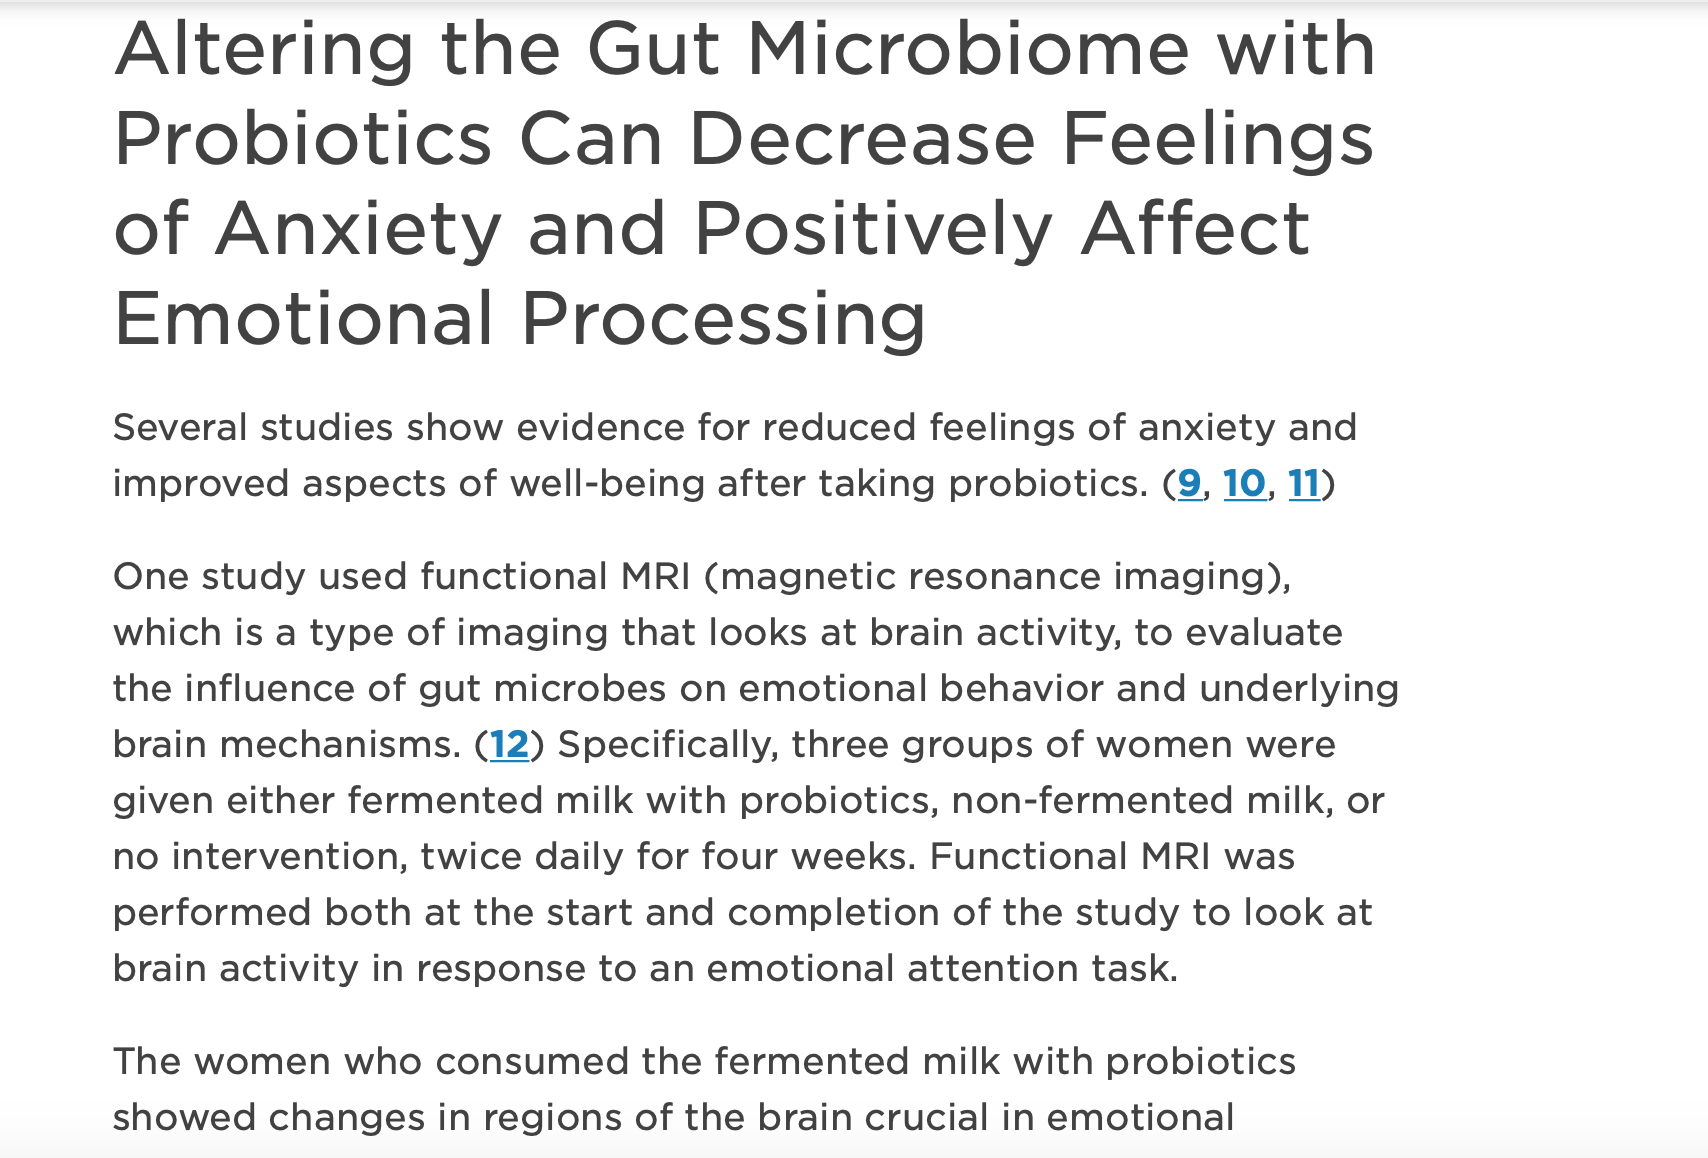 Chris Kresser psychobiotics gut brain connection education uplift food probiotics